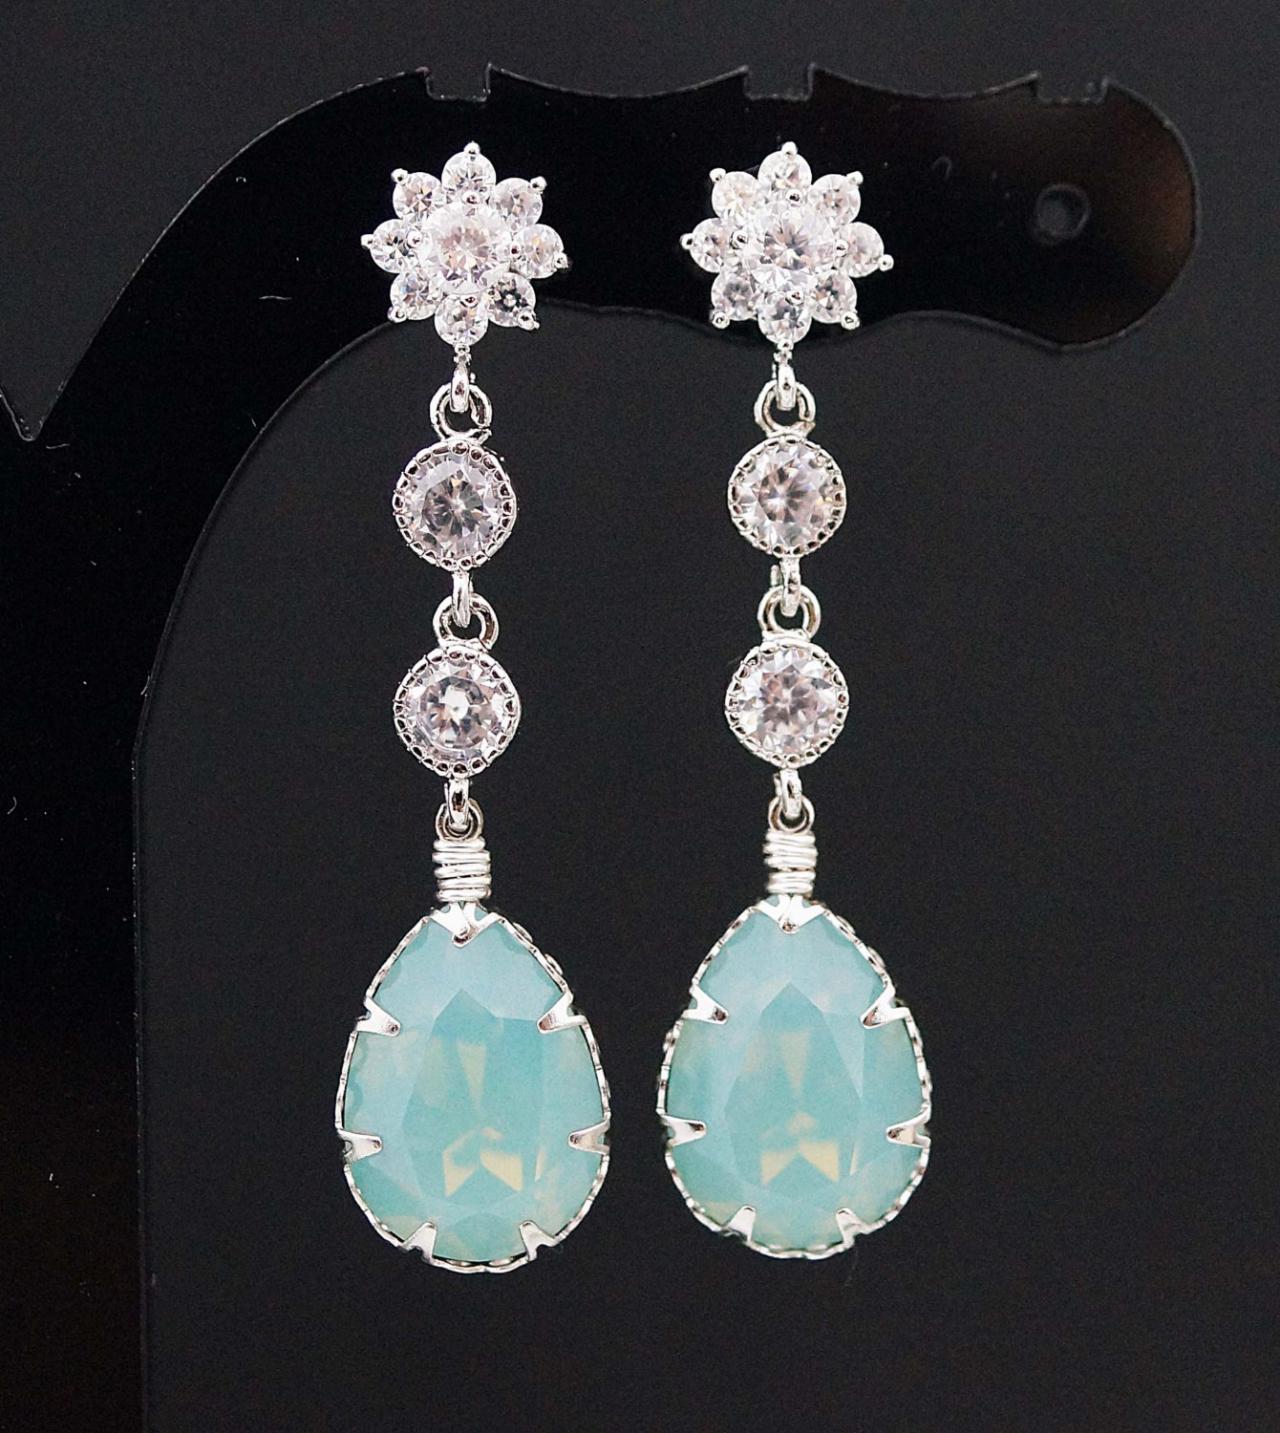 Wedding Bridal Earrings Bridesmaid Earrings Mint Pacific Opal Swarovski Crystal And Cz Connectors Drop Dangle Earrings